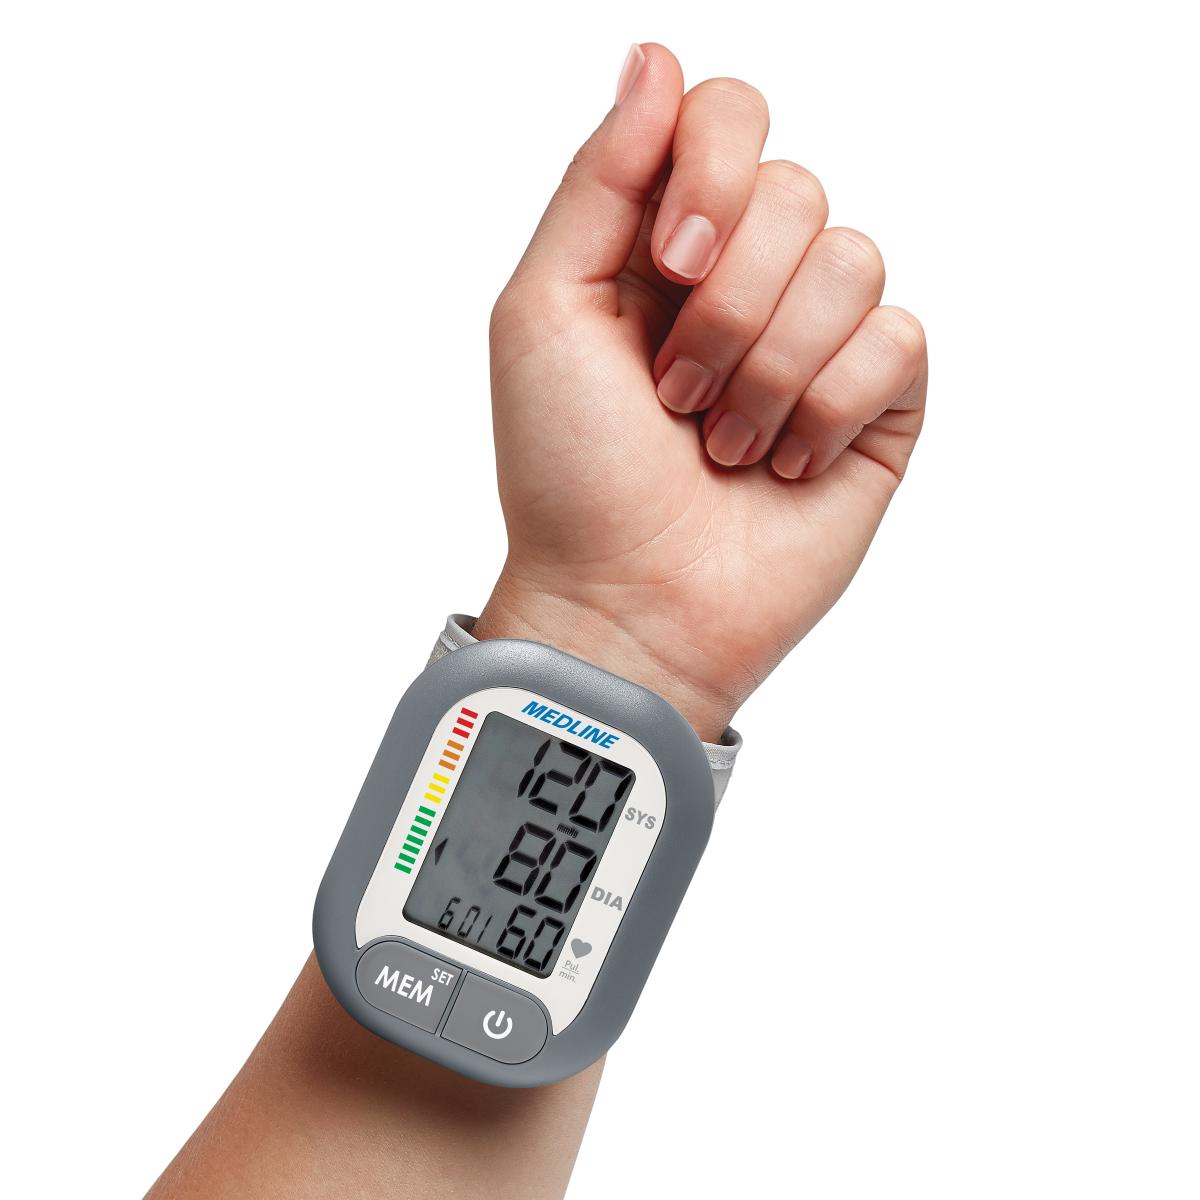 Manual Digital Blood Pressure Monitor, Medline